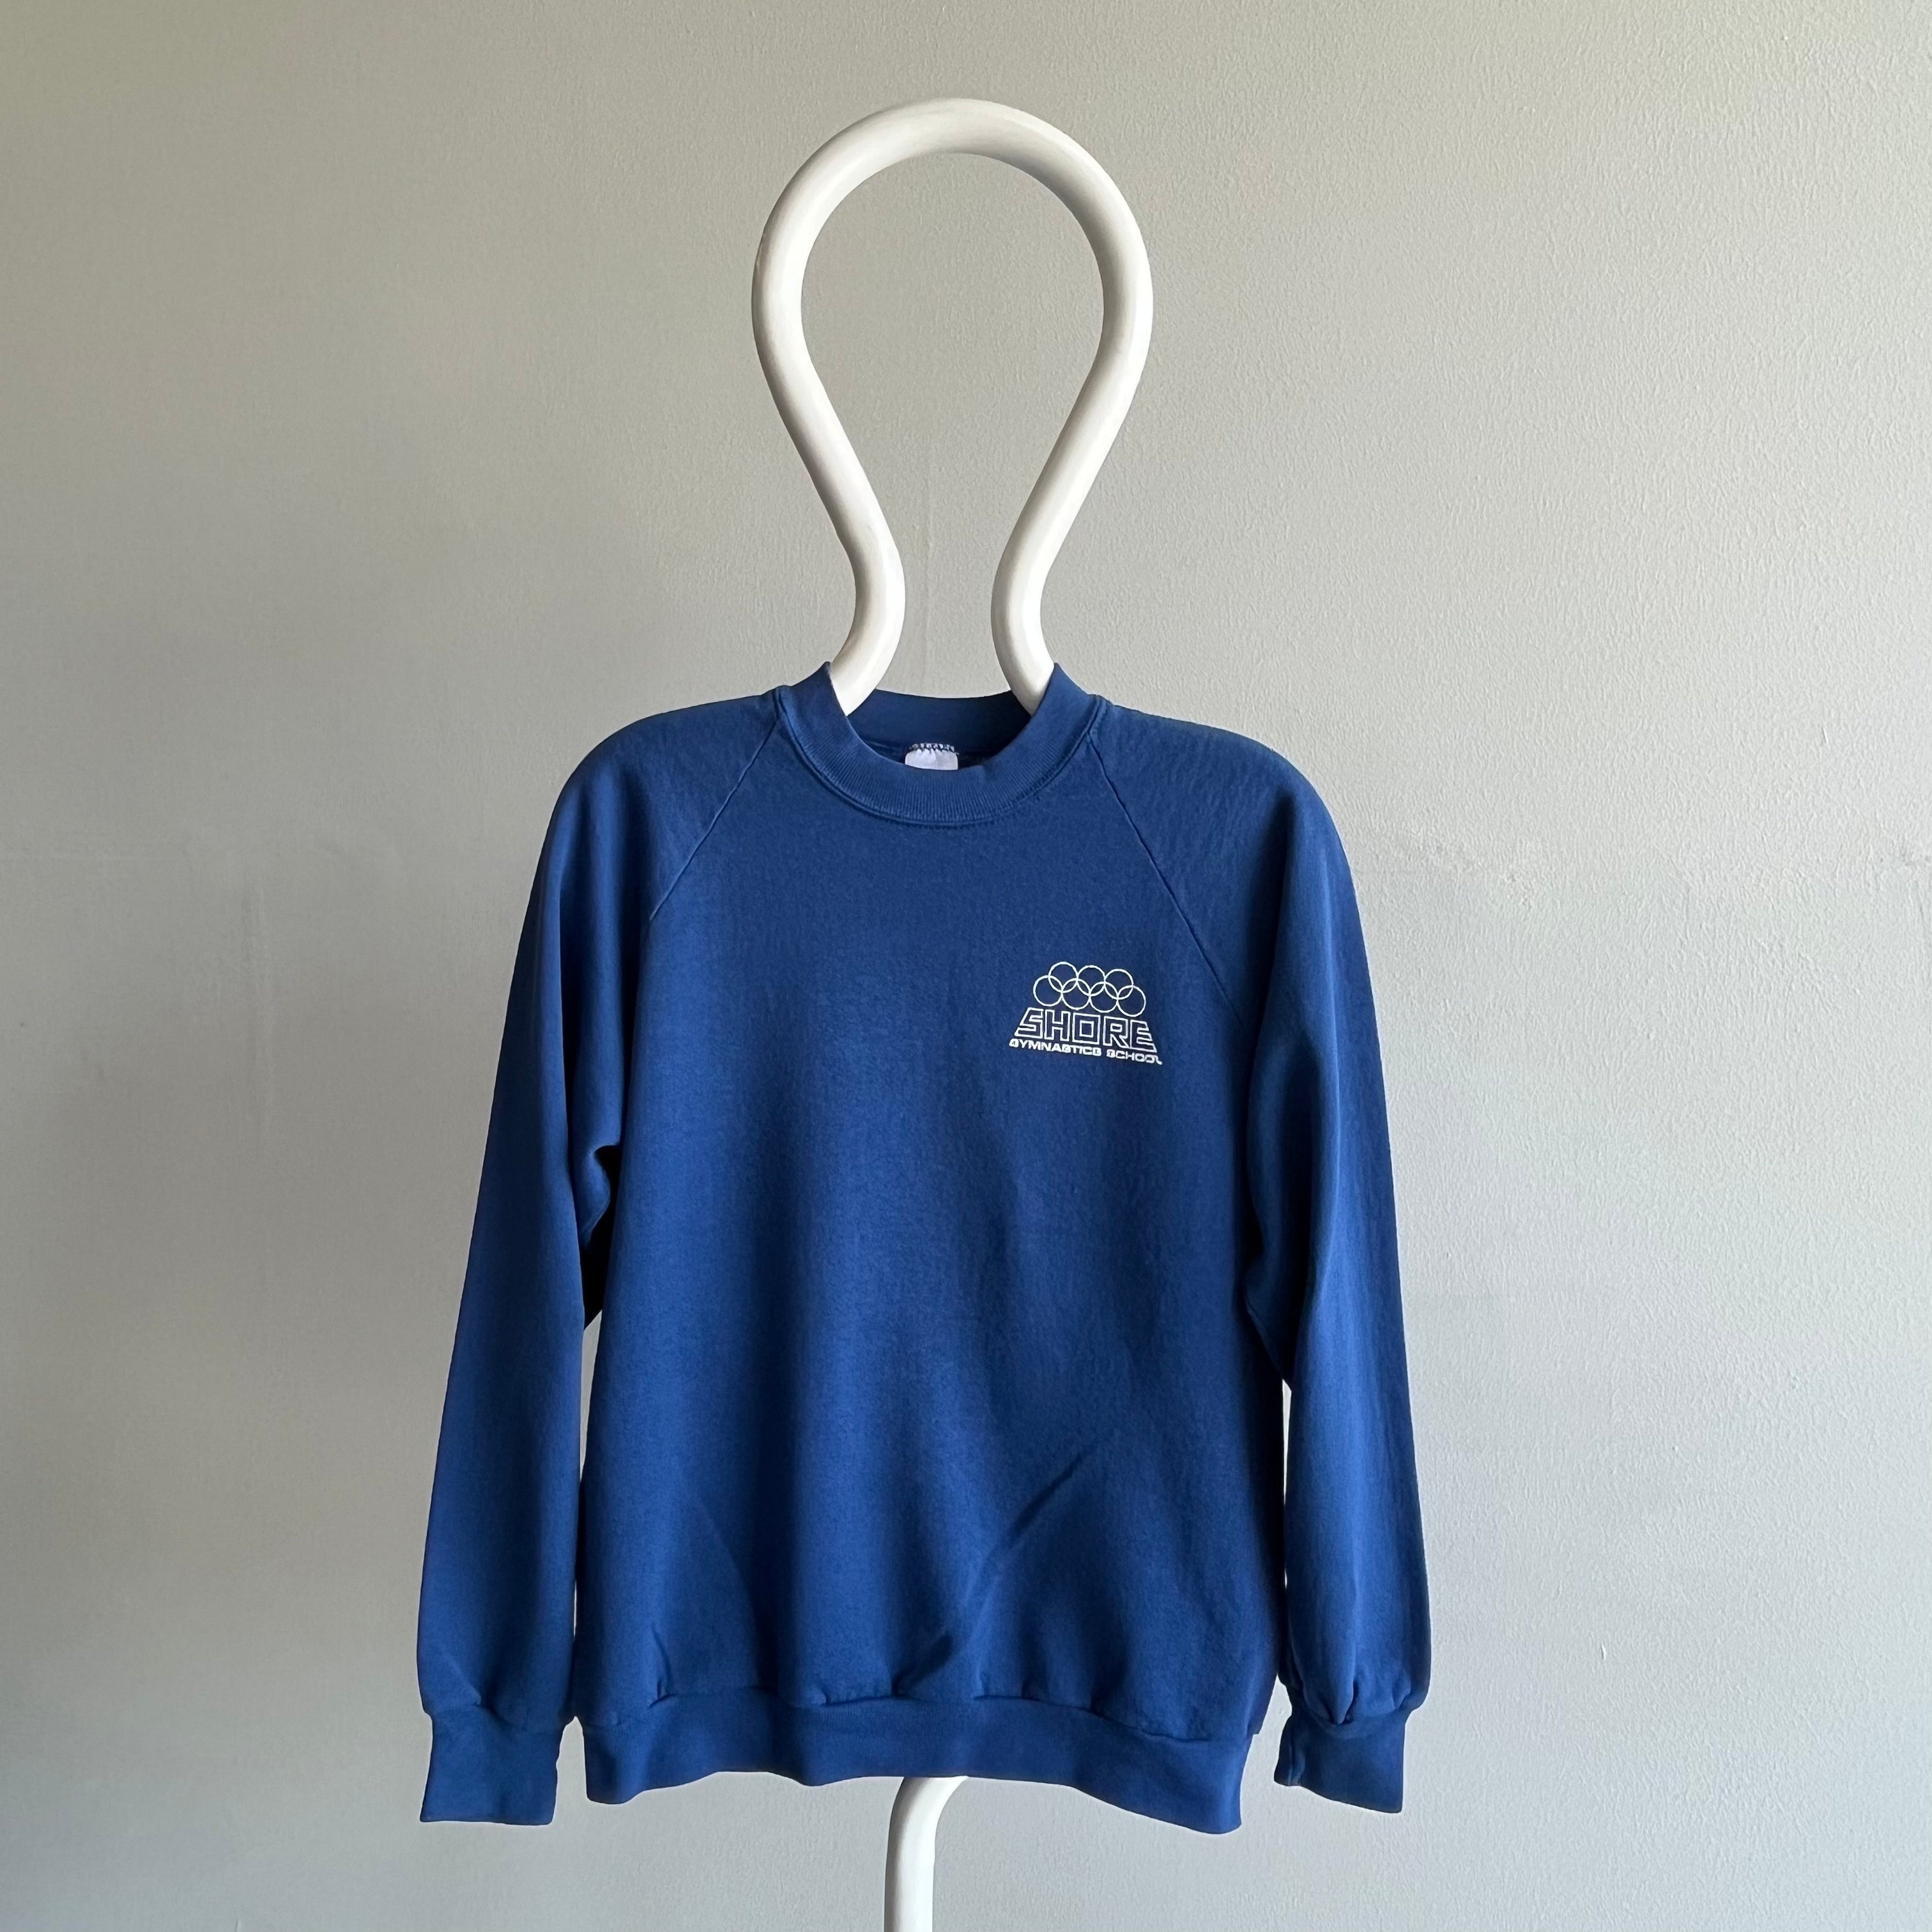 1980s Shore Gymnastic School Front and Back Sweatshirt